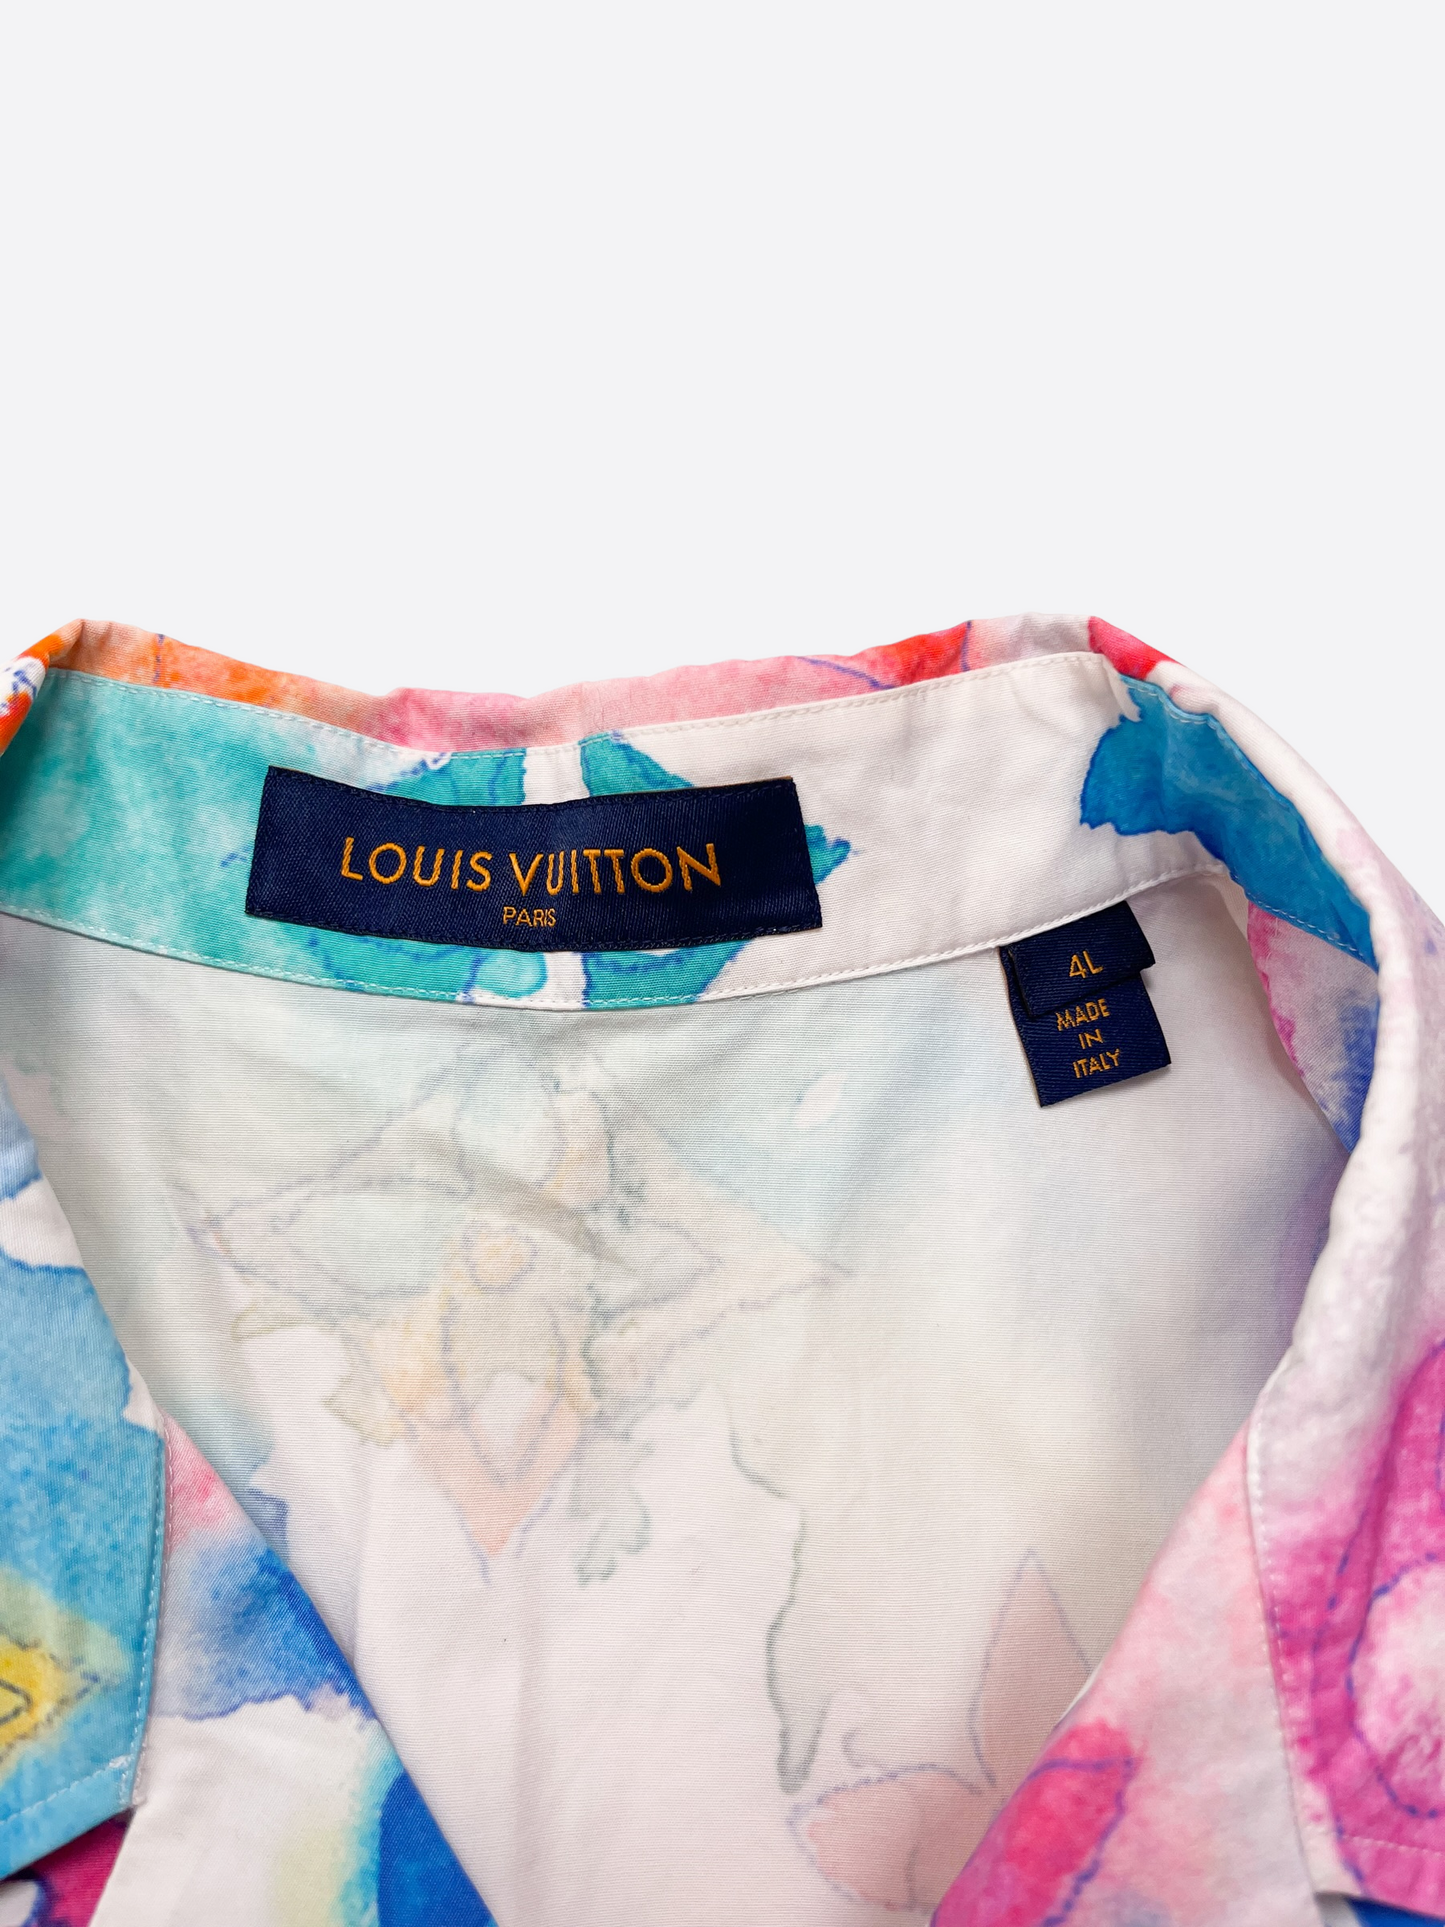 Louis Vuitton Watercolor Short Sleeve Shirt